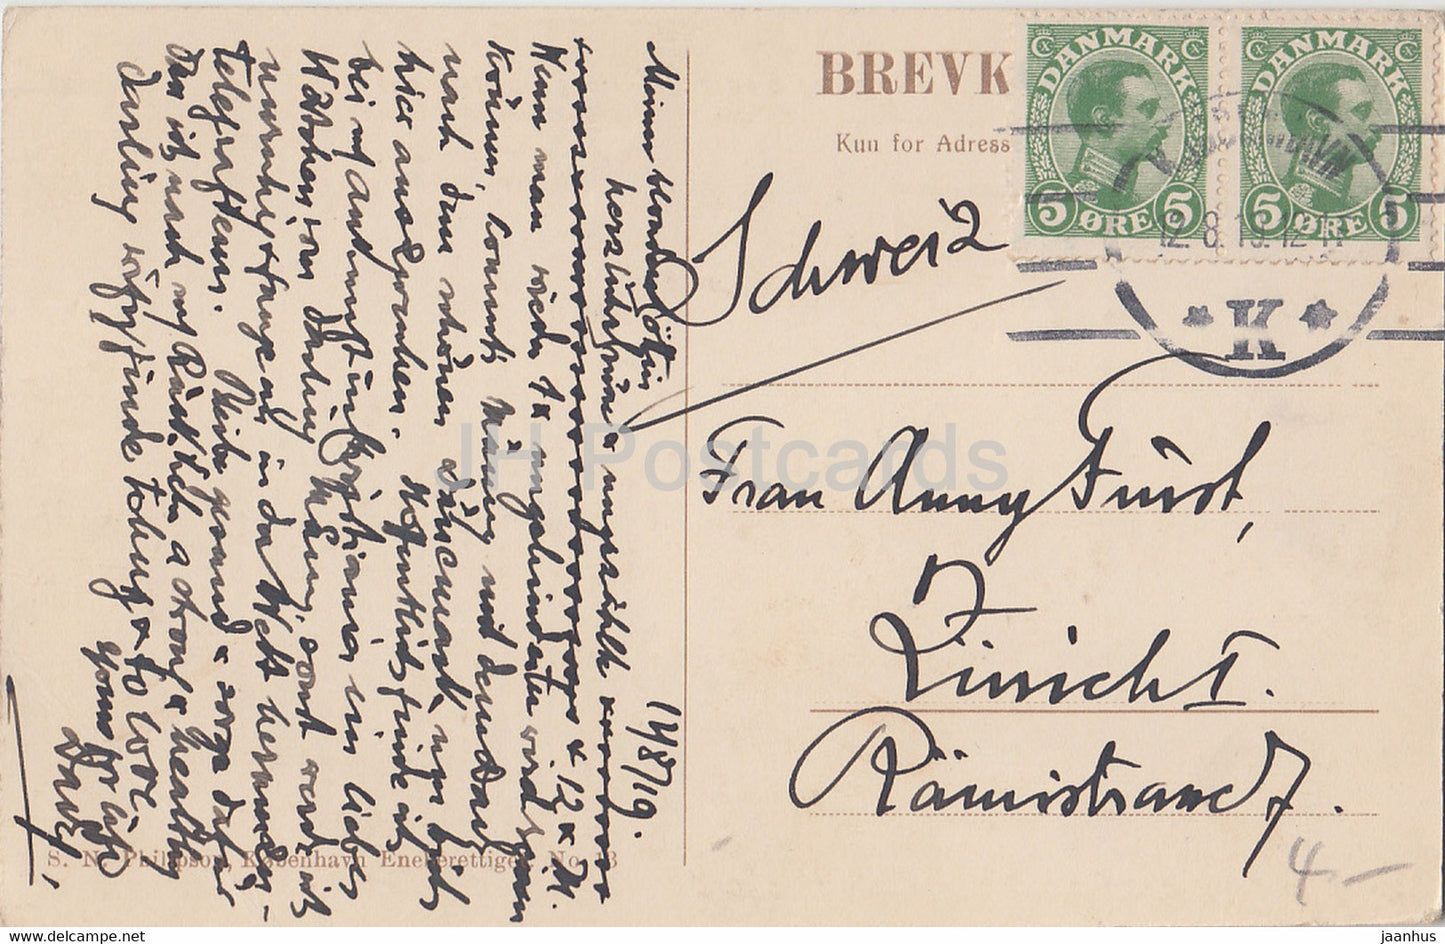 Copenhague - Kobenhavn - Amalienborg med HM Kongens Residens - carte postale ancienne - 1919 - Danemark - utilisé